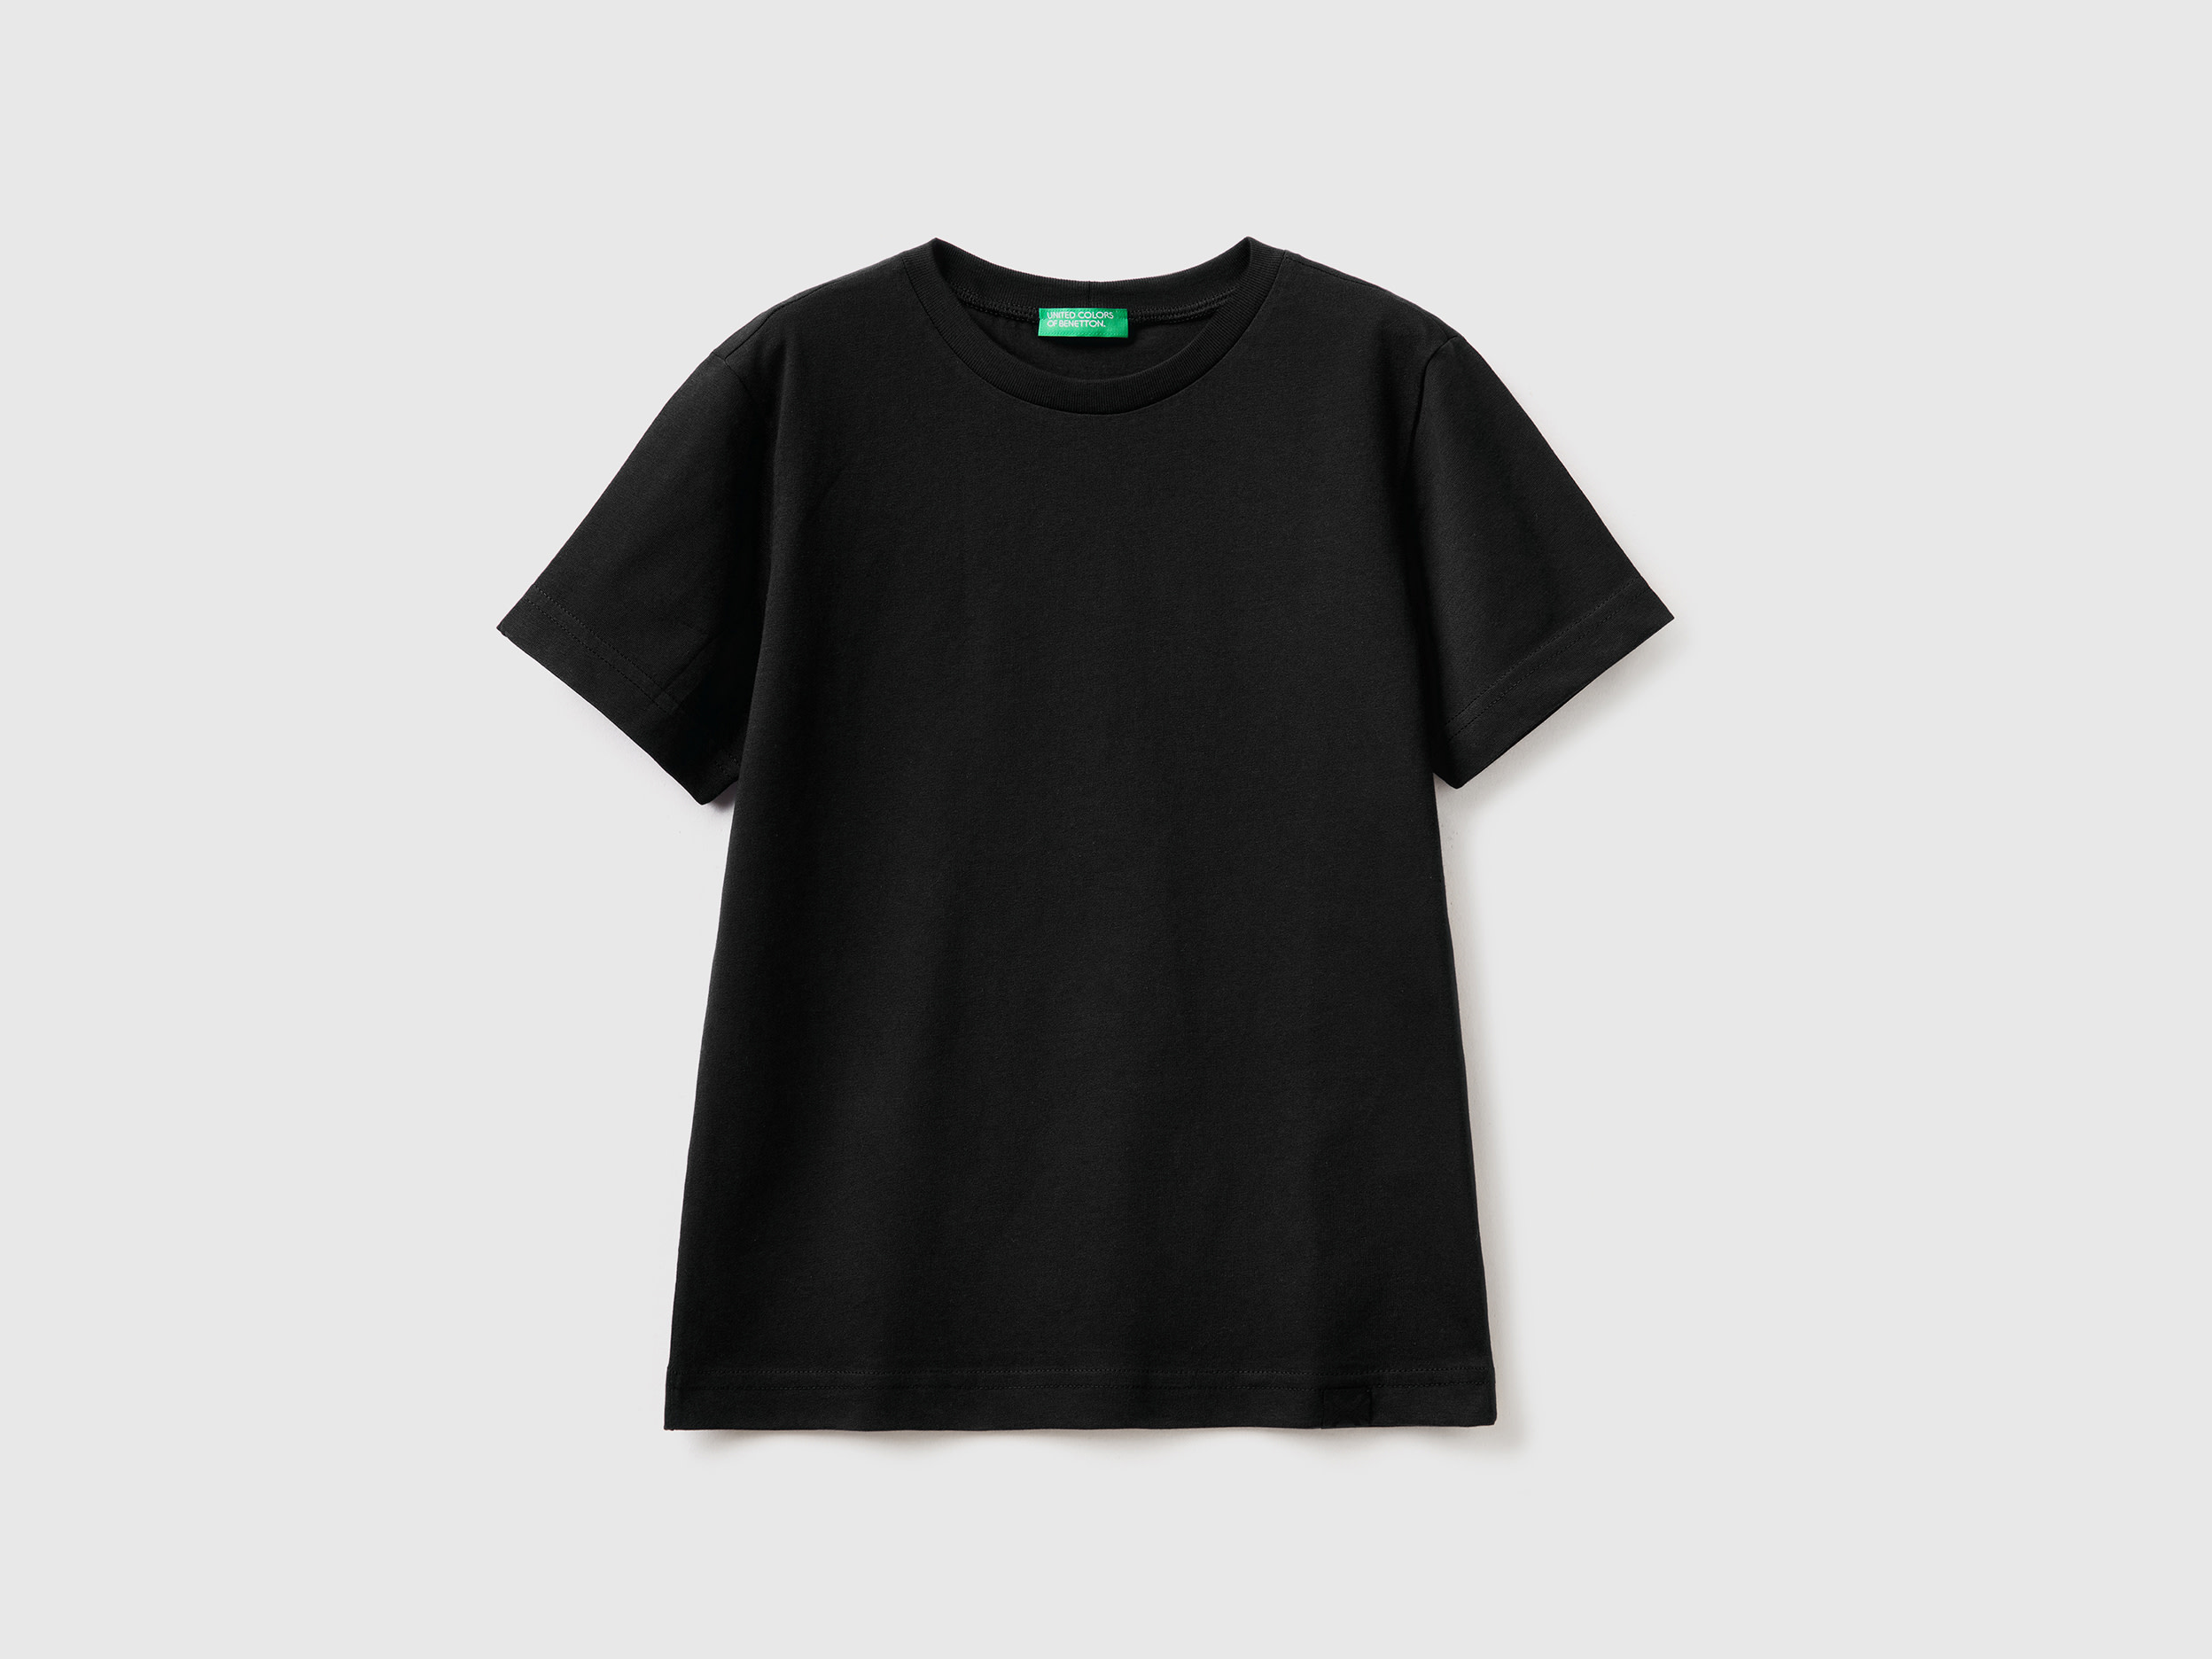 Benetton, Organic Cotton T-shirt, size L, Black, Kids